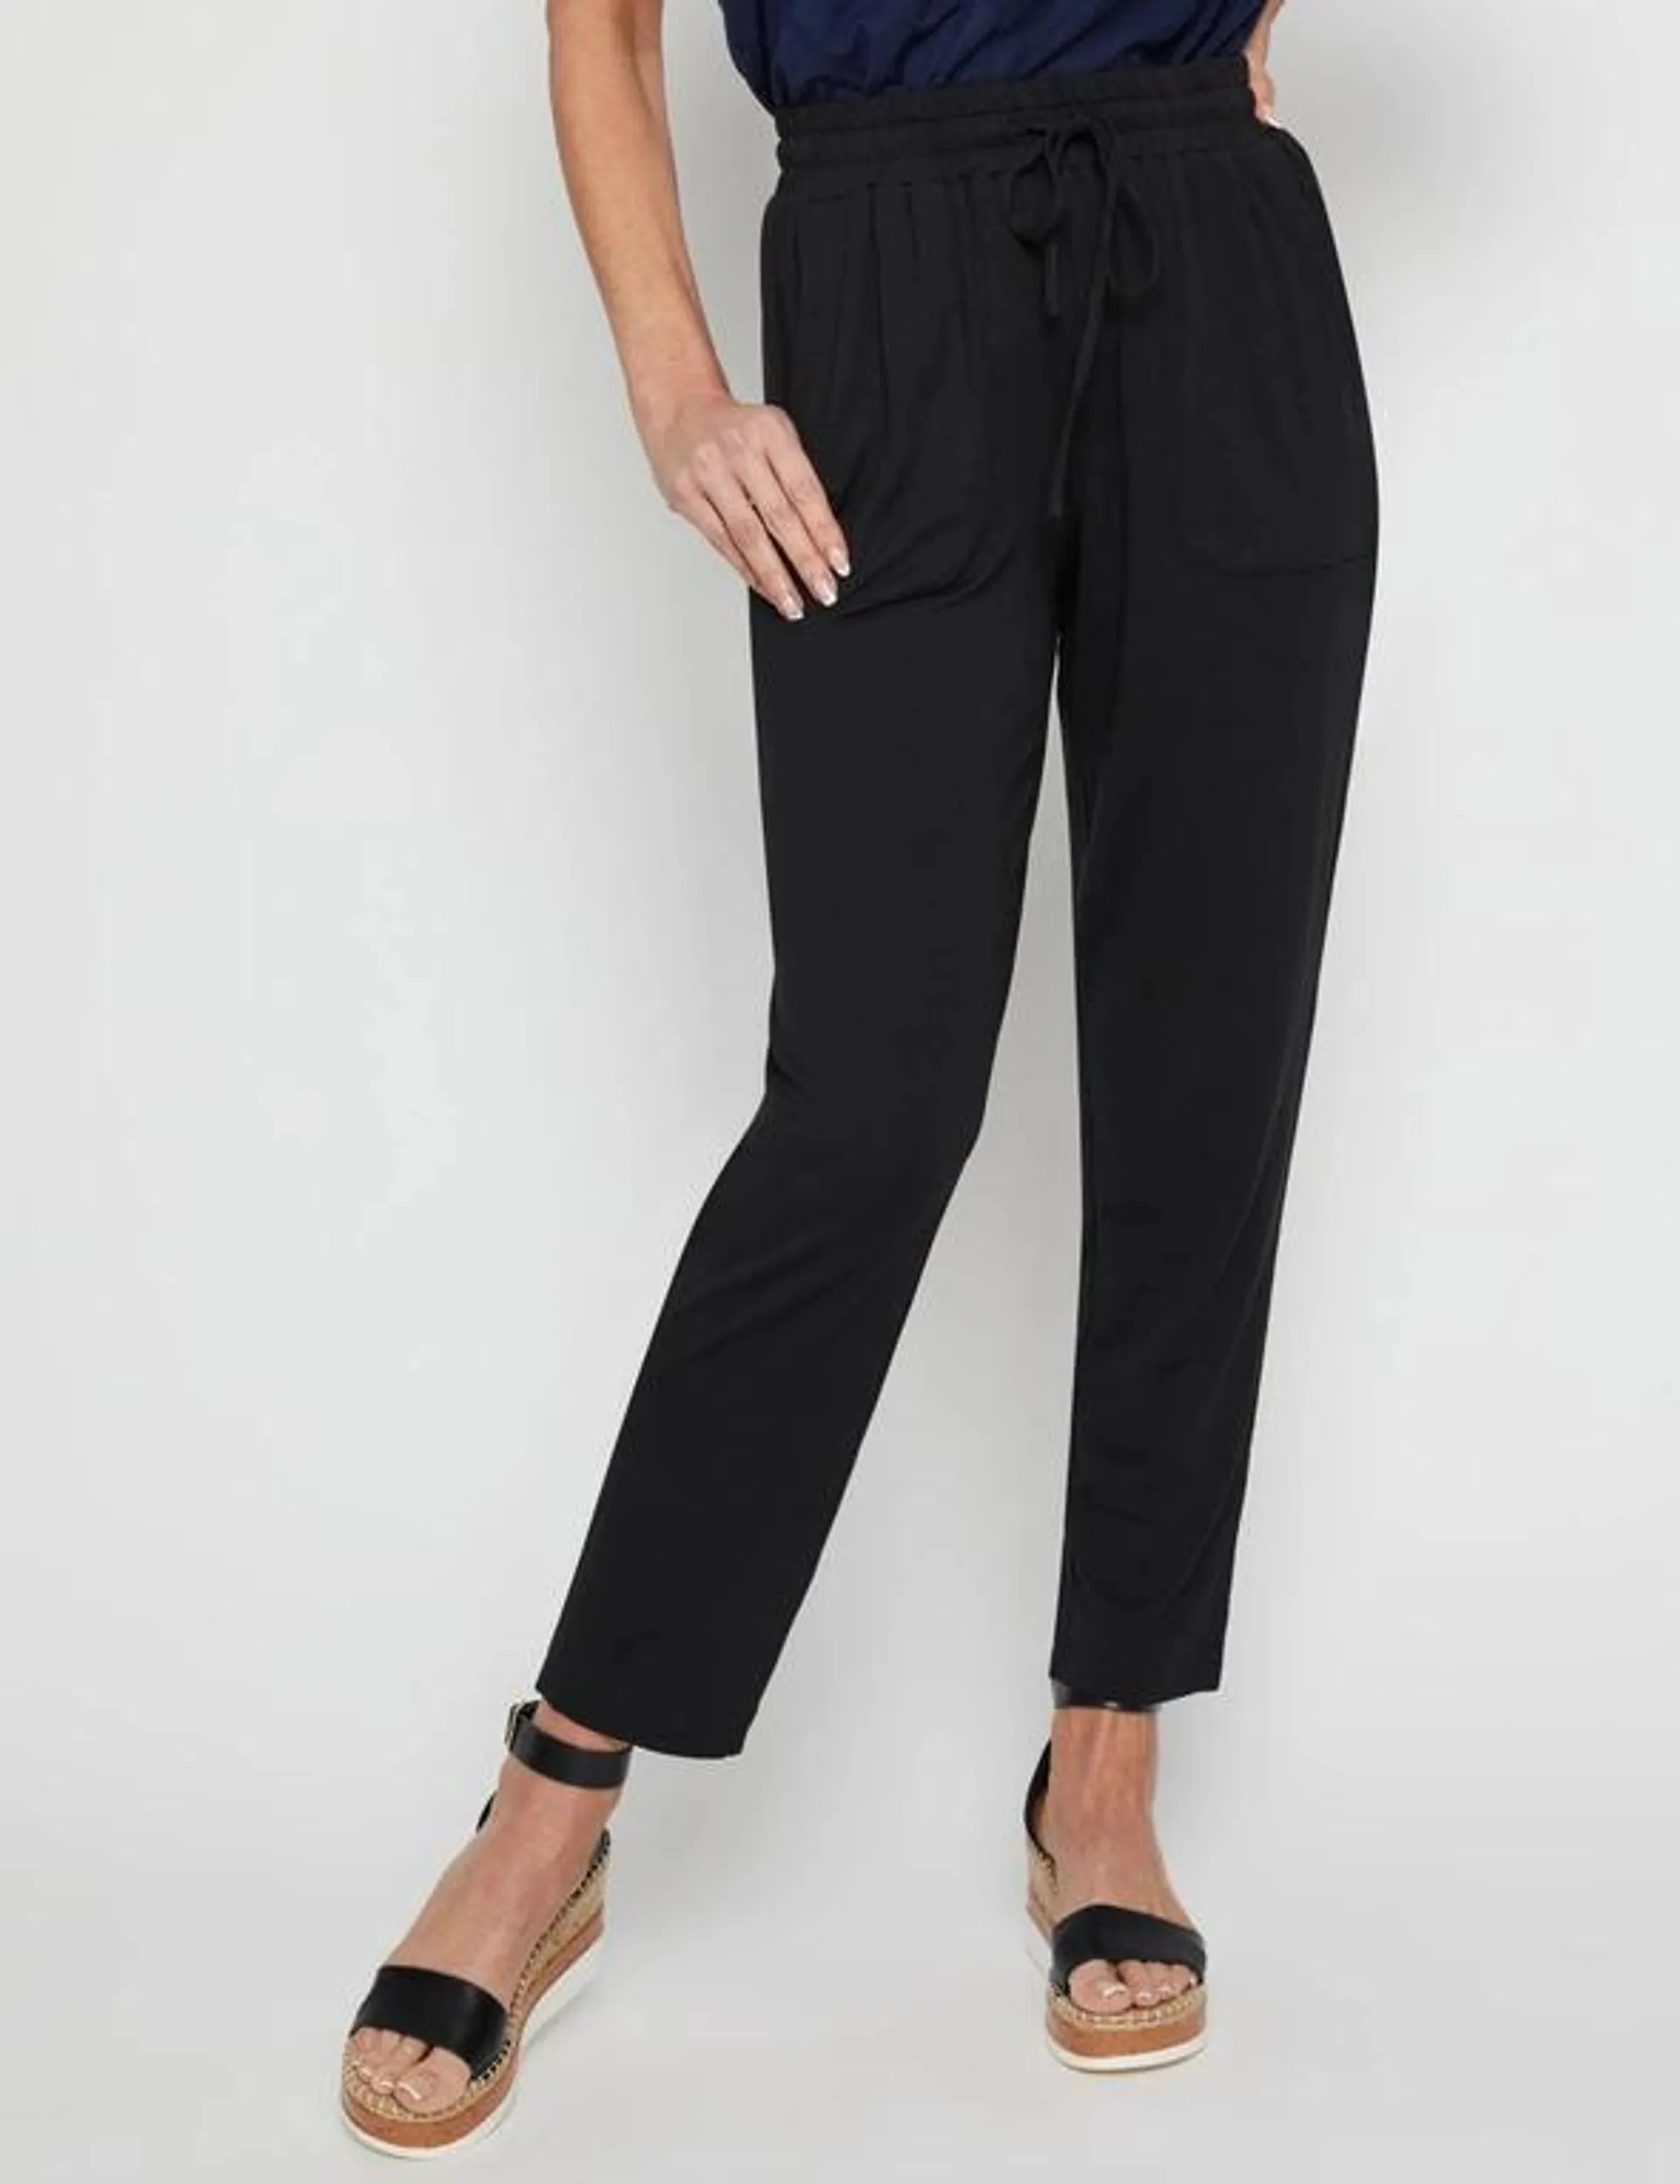 Millers Full Length Jersey Pant Plain Black